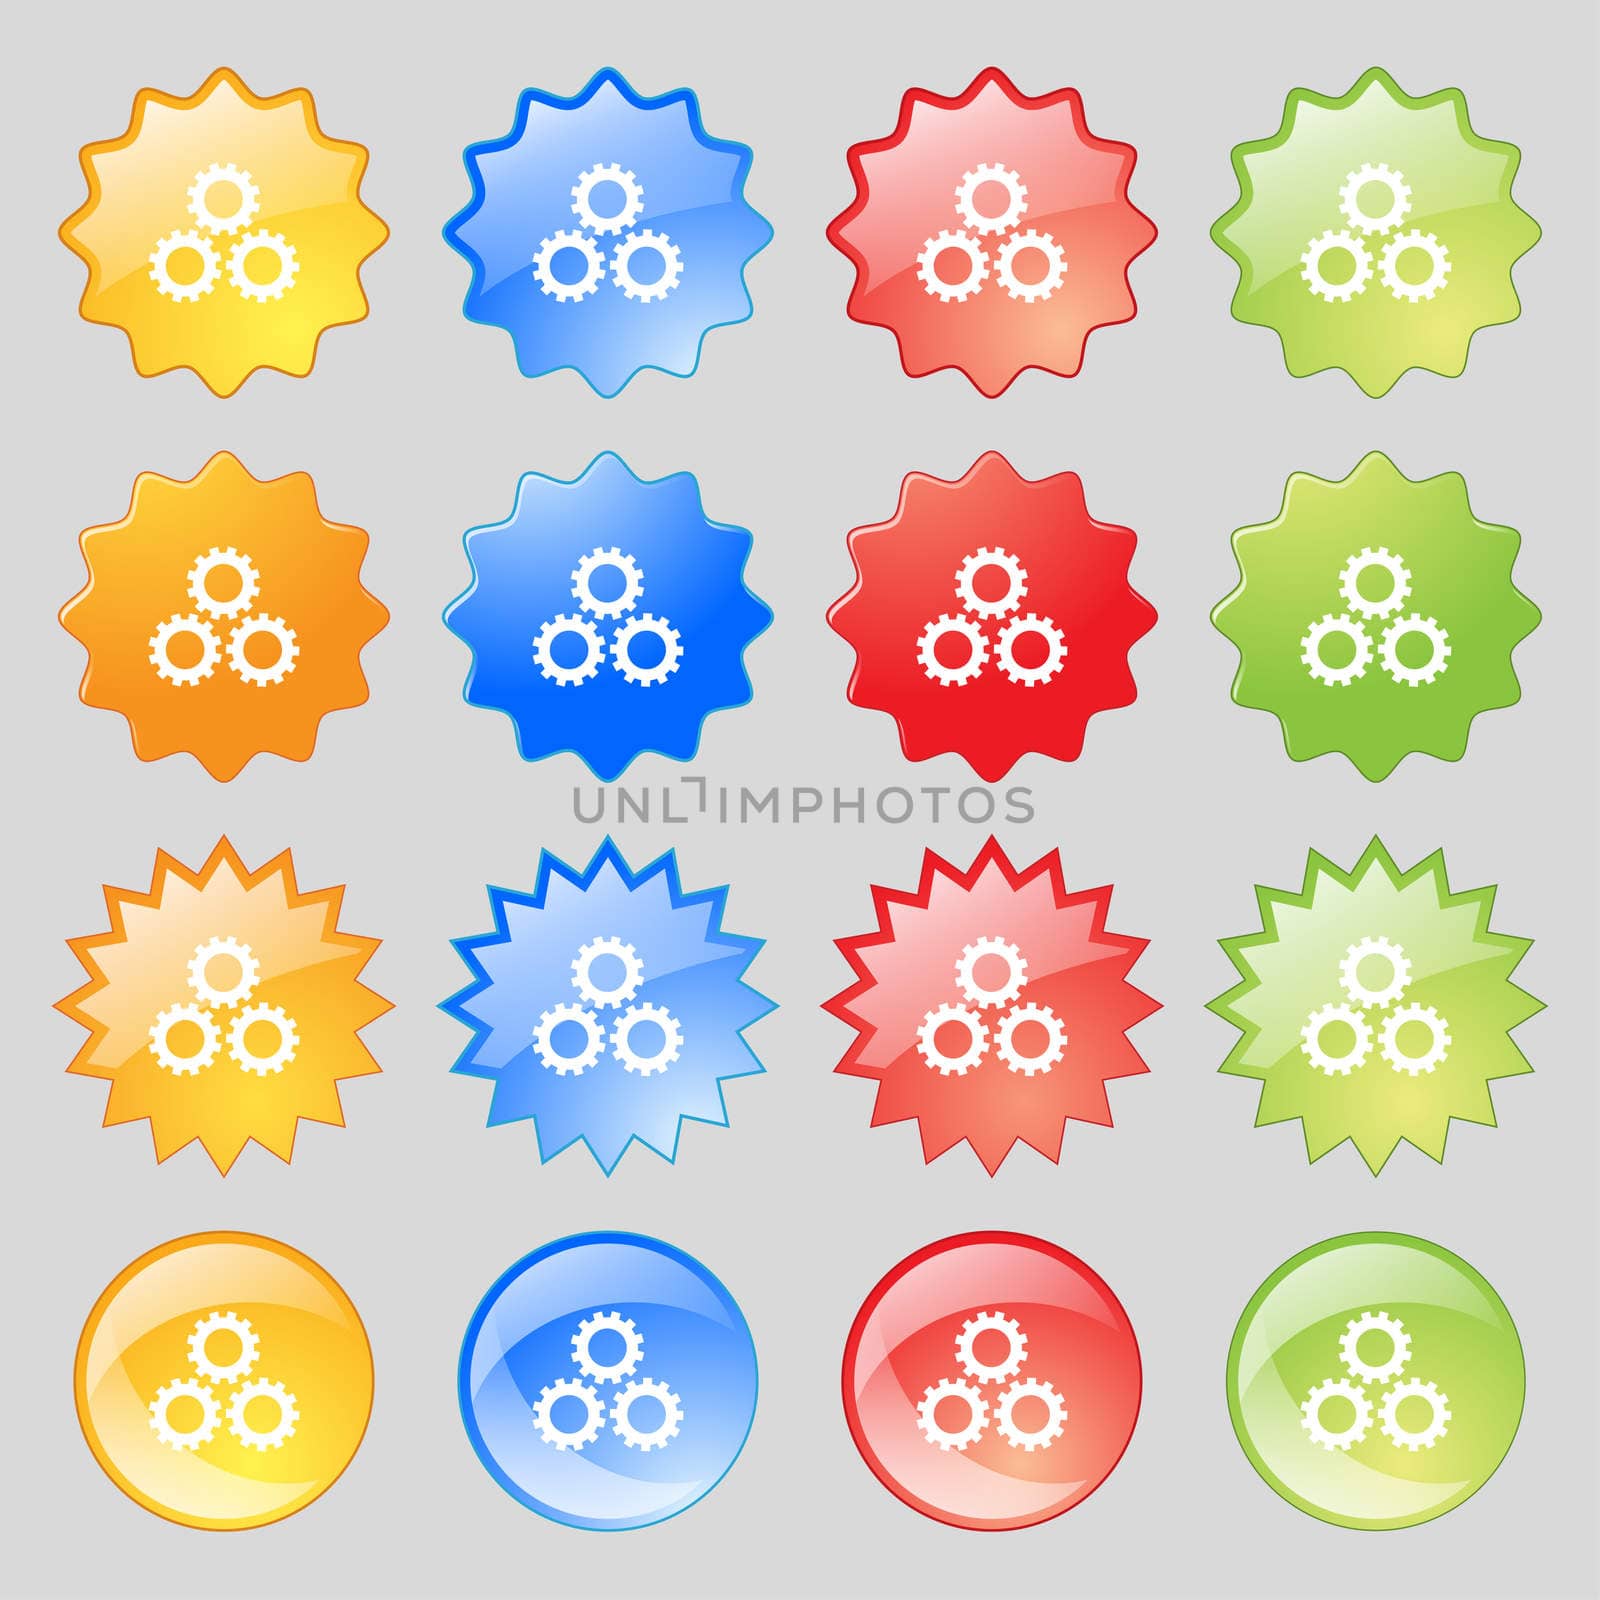 Cog settings sign icon. Cogwheel gear mechanism symbol. Big set of 16 colorful modern buttons for your design. illustration